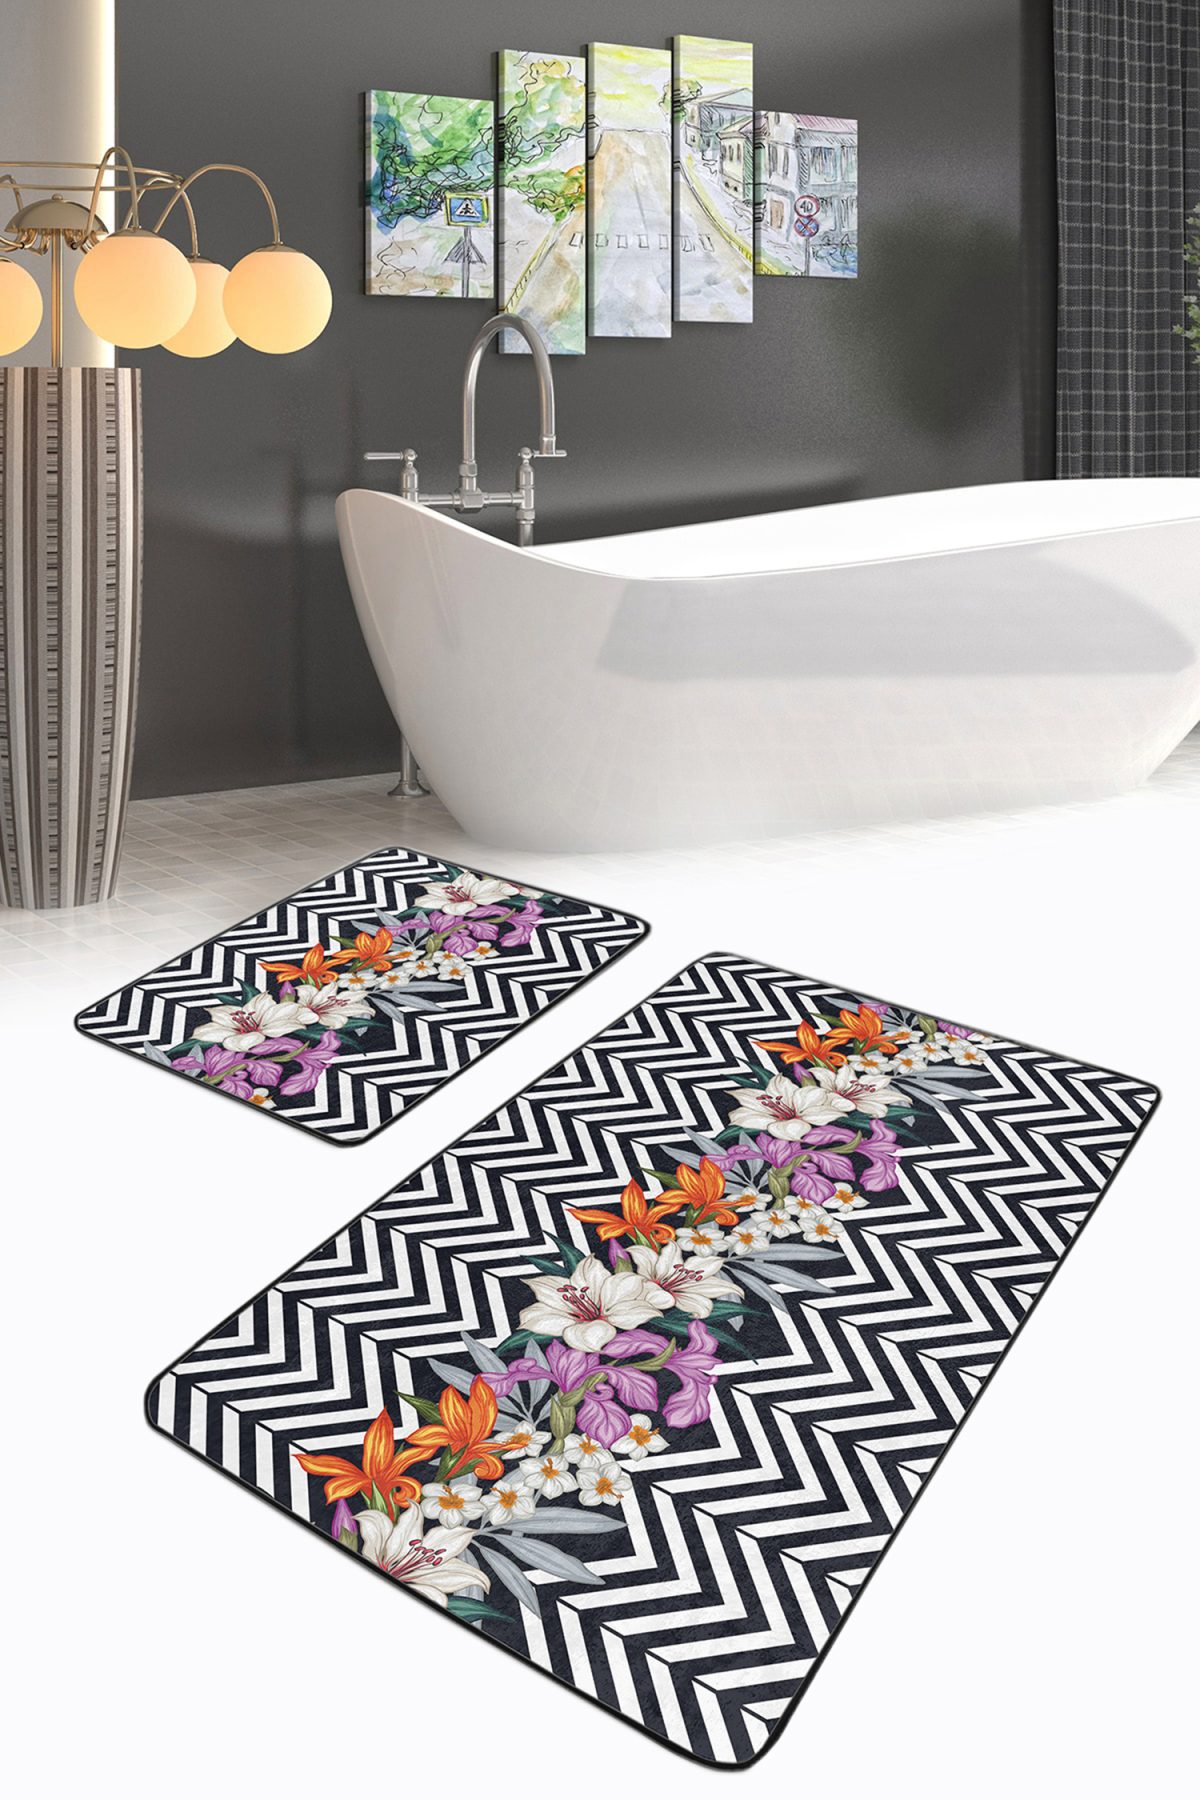 Zigzag Zemin Renkli Gül Tasarımlı 2'li Kaymaz Tabanlı Banyo & Mutfak Paspas Takımı Realhomes